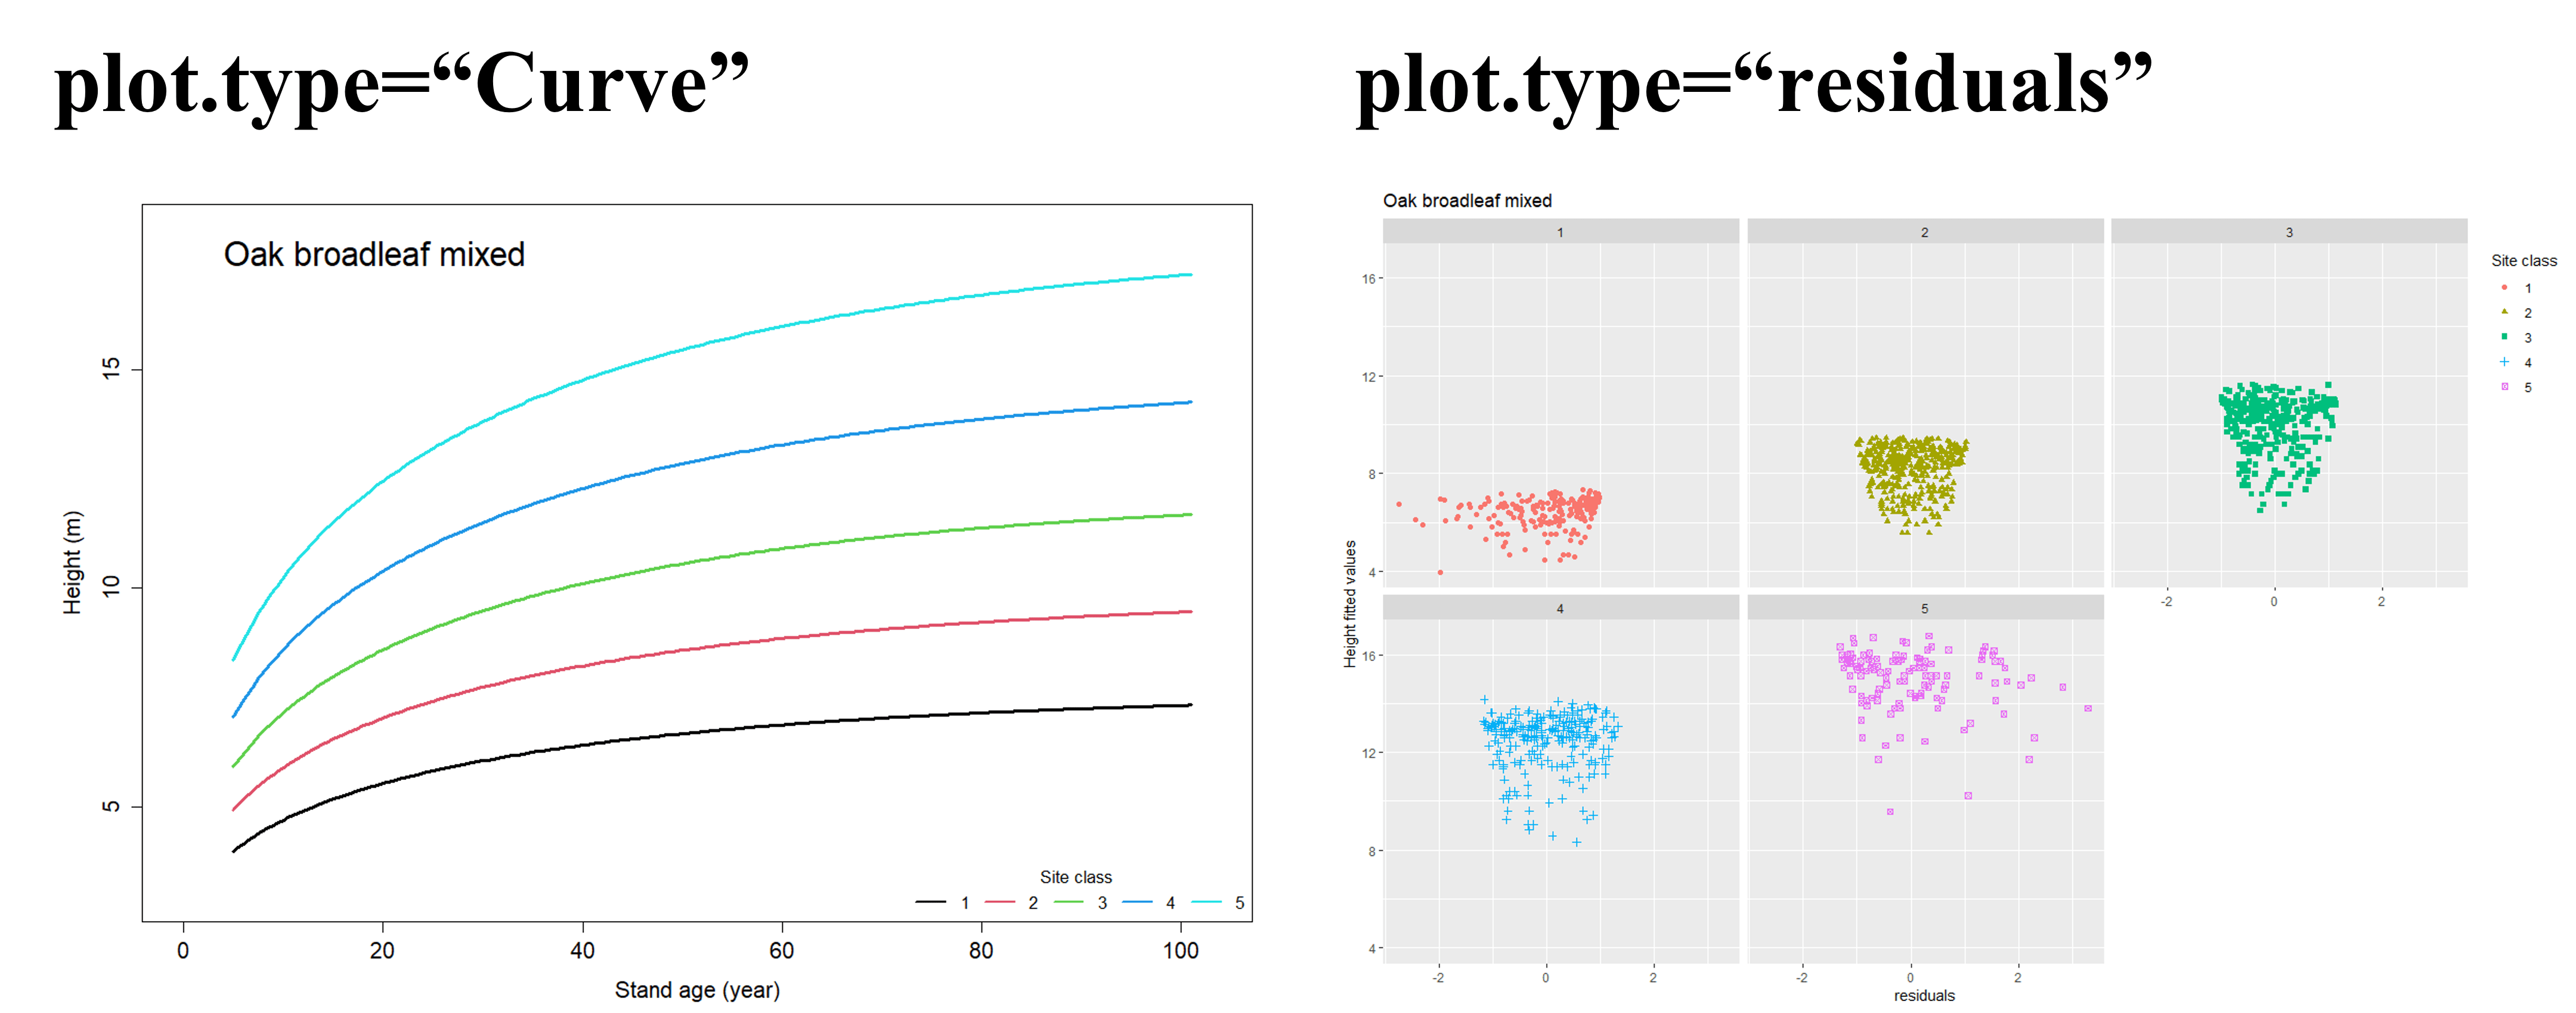 Grid of plots for evaluating models